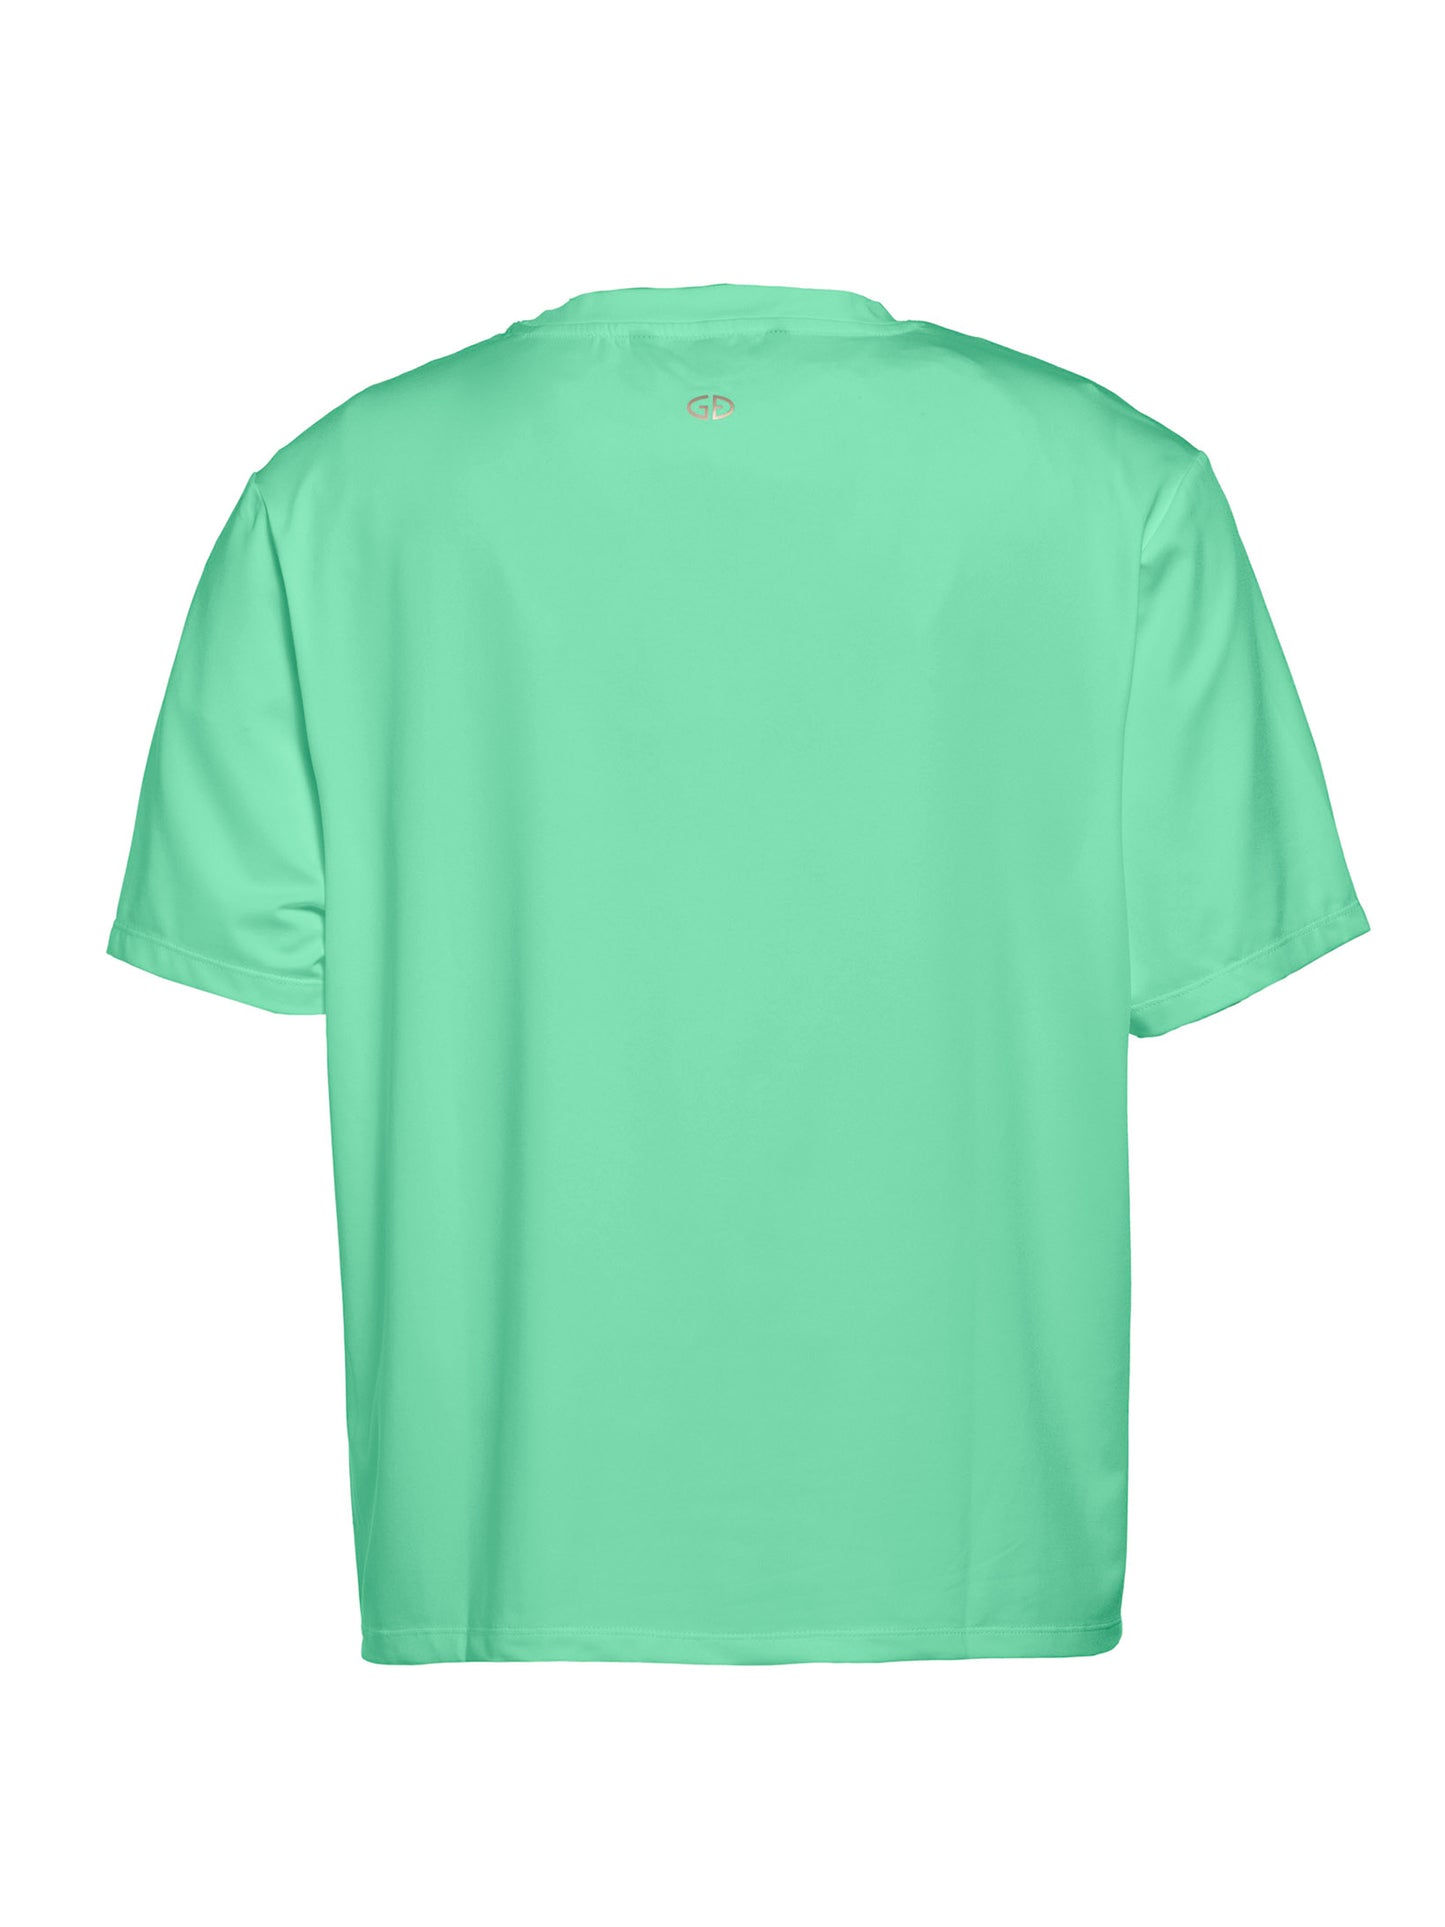 BOXY short sleeve top spring green